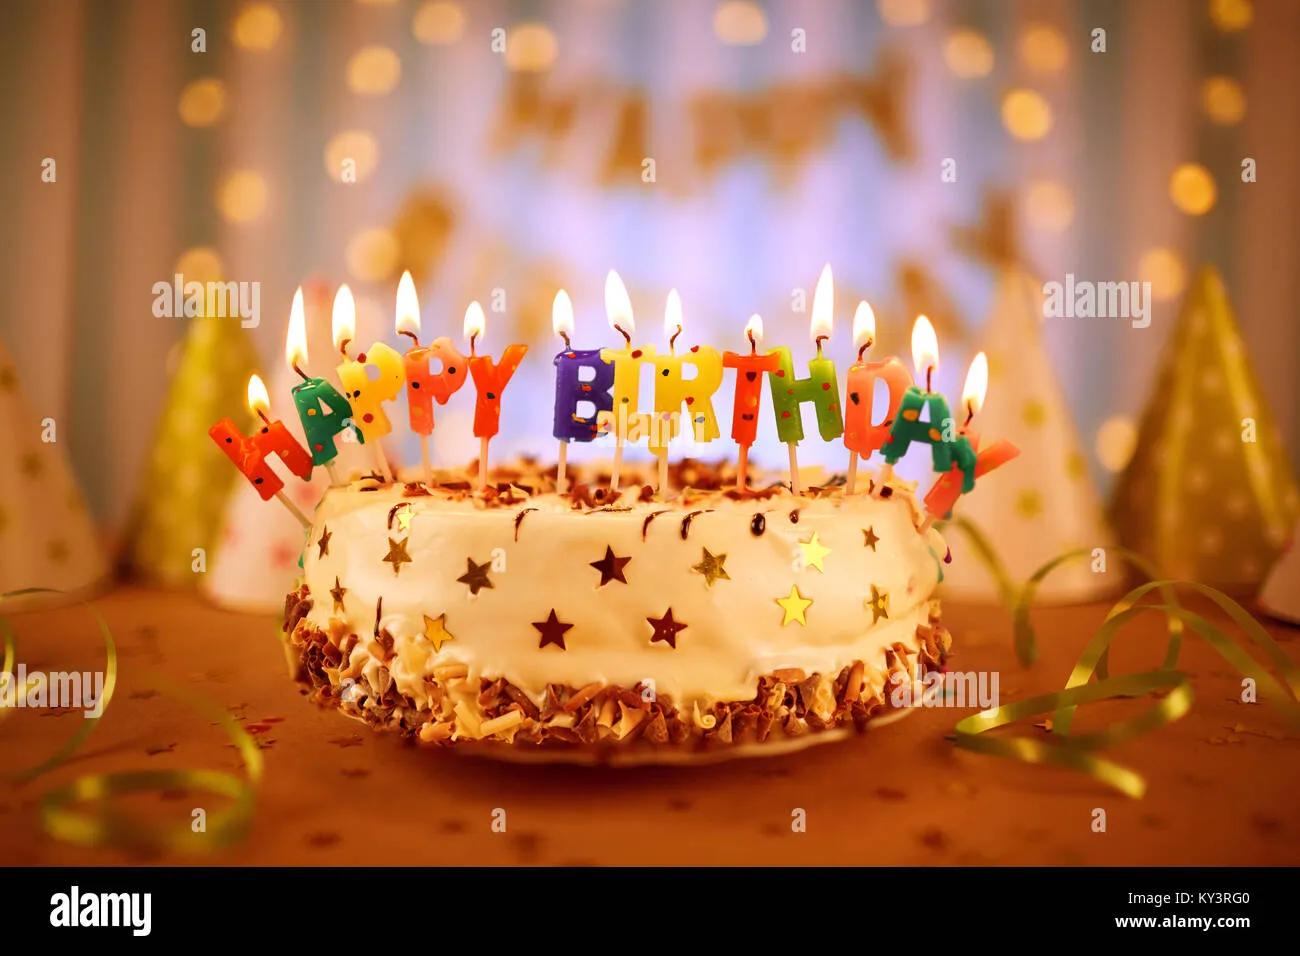 Geburtstagstorte mit Kerzen Stockfotografie - Alamy